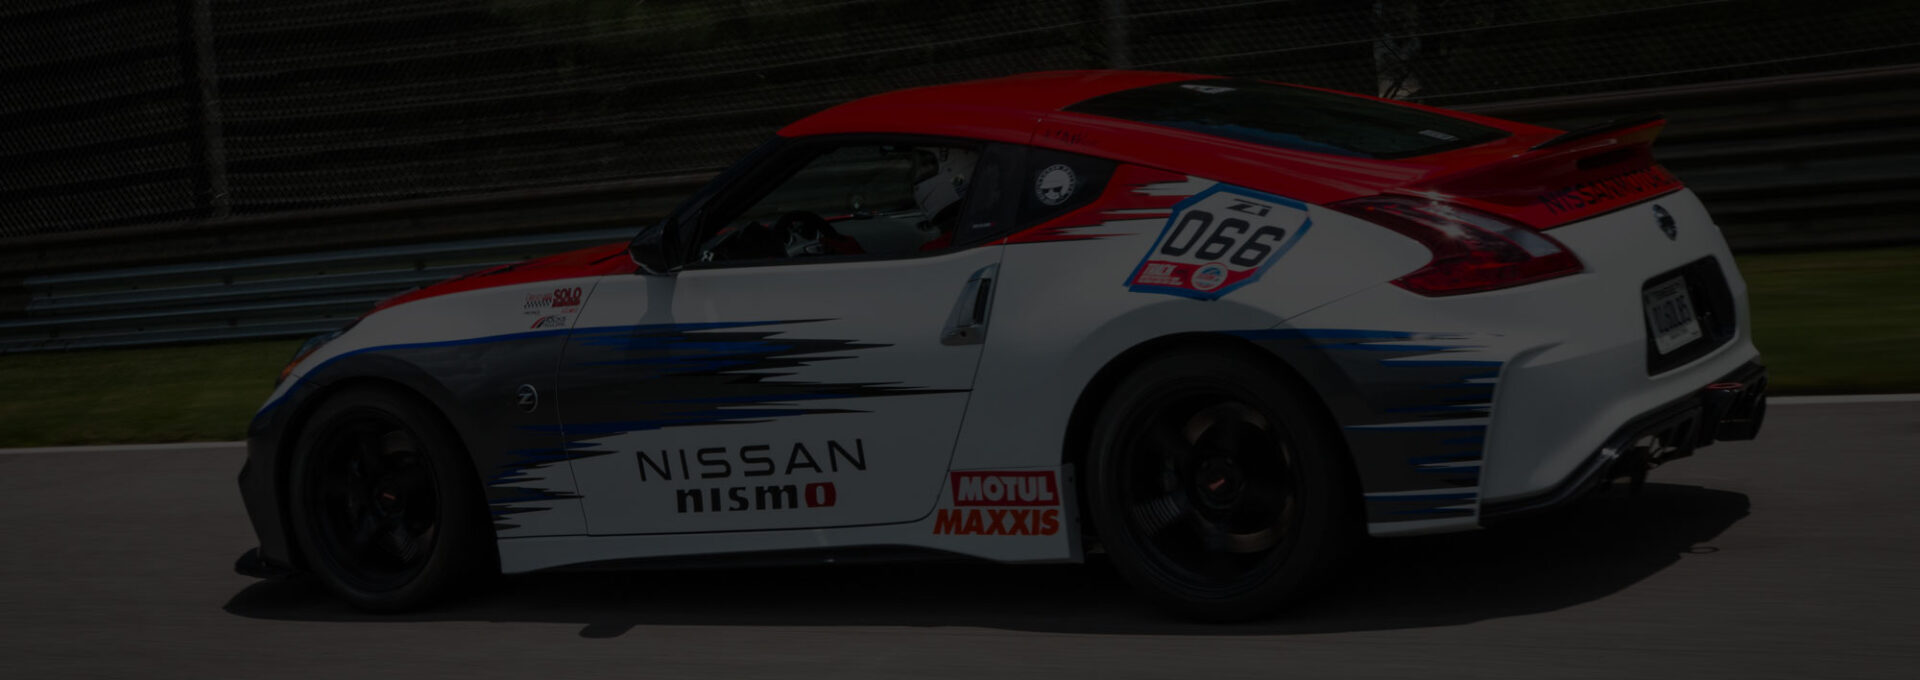 Darkened image of Nissan car.